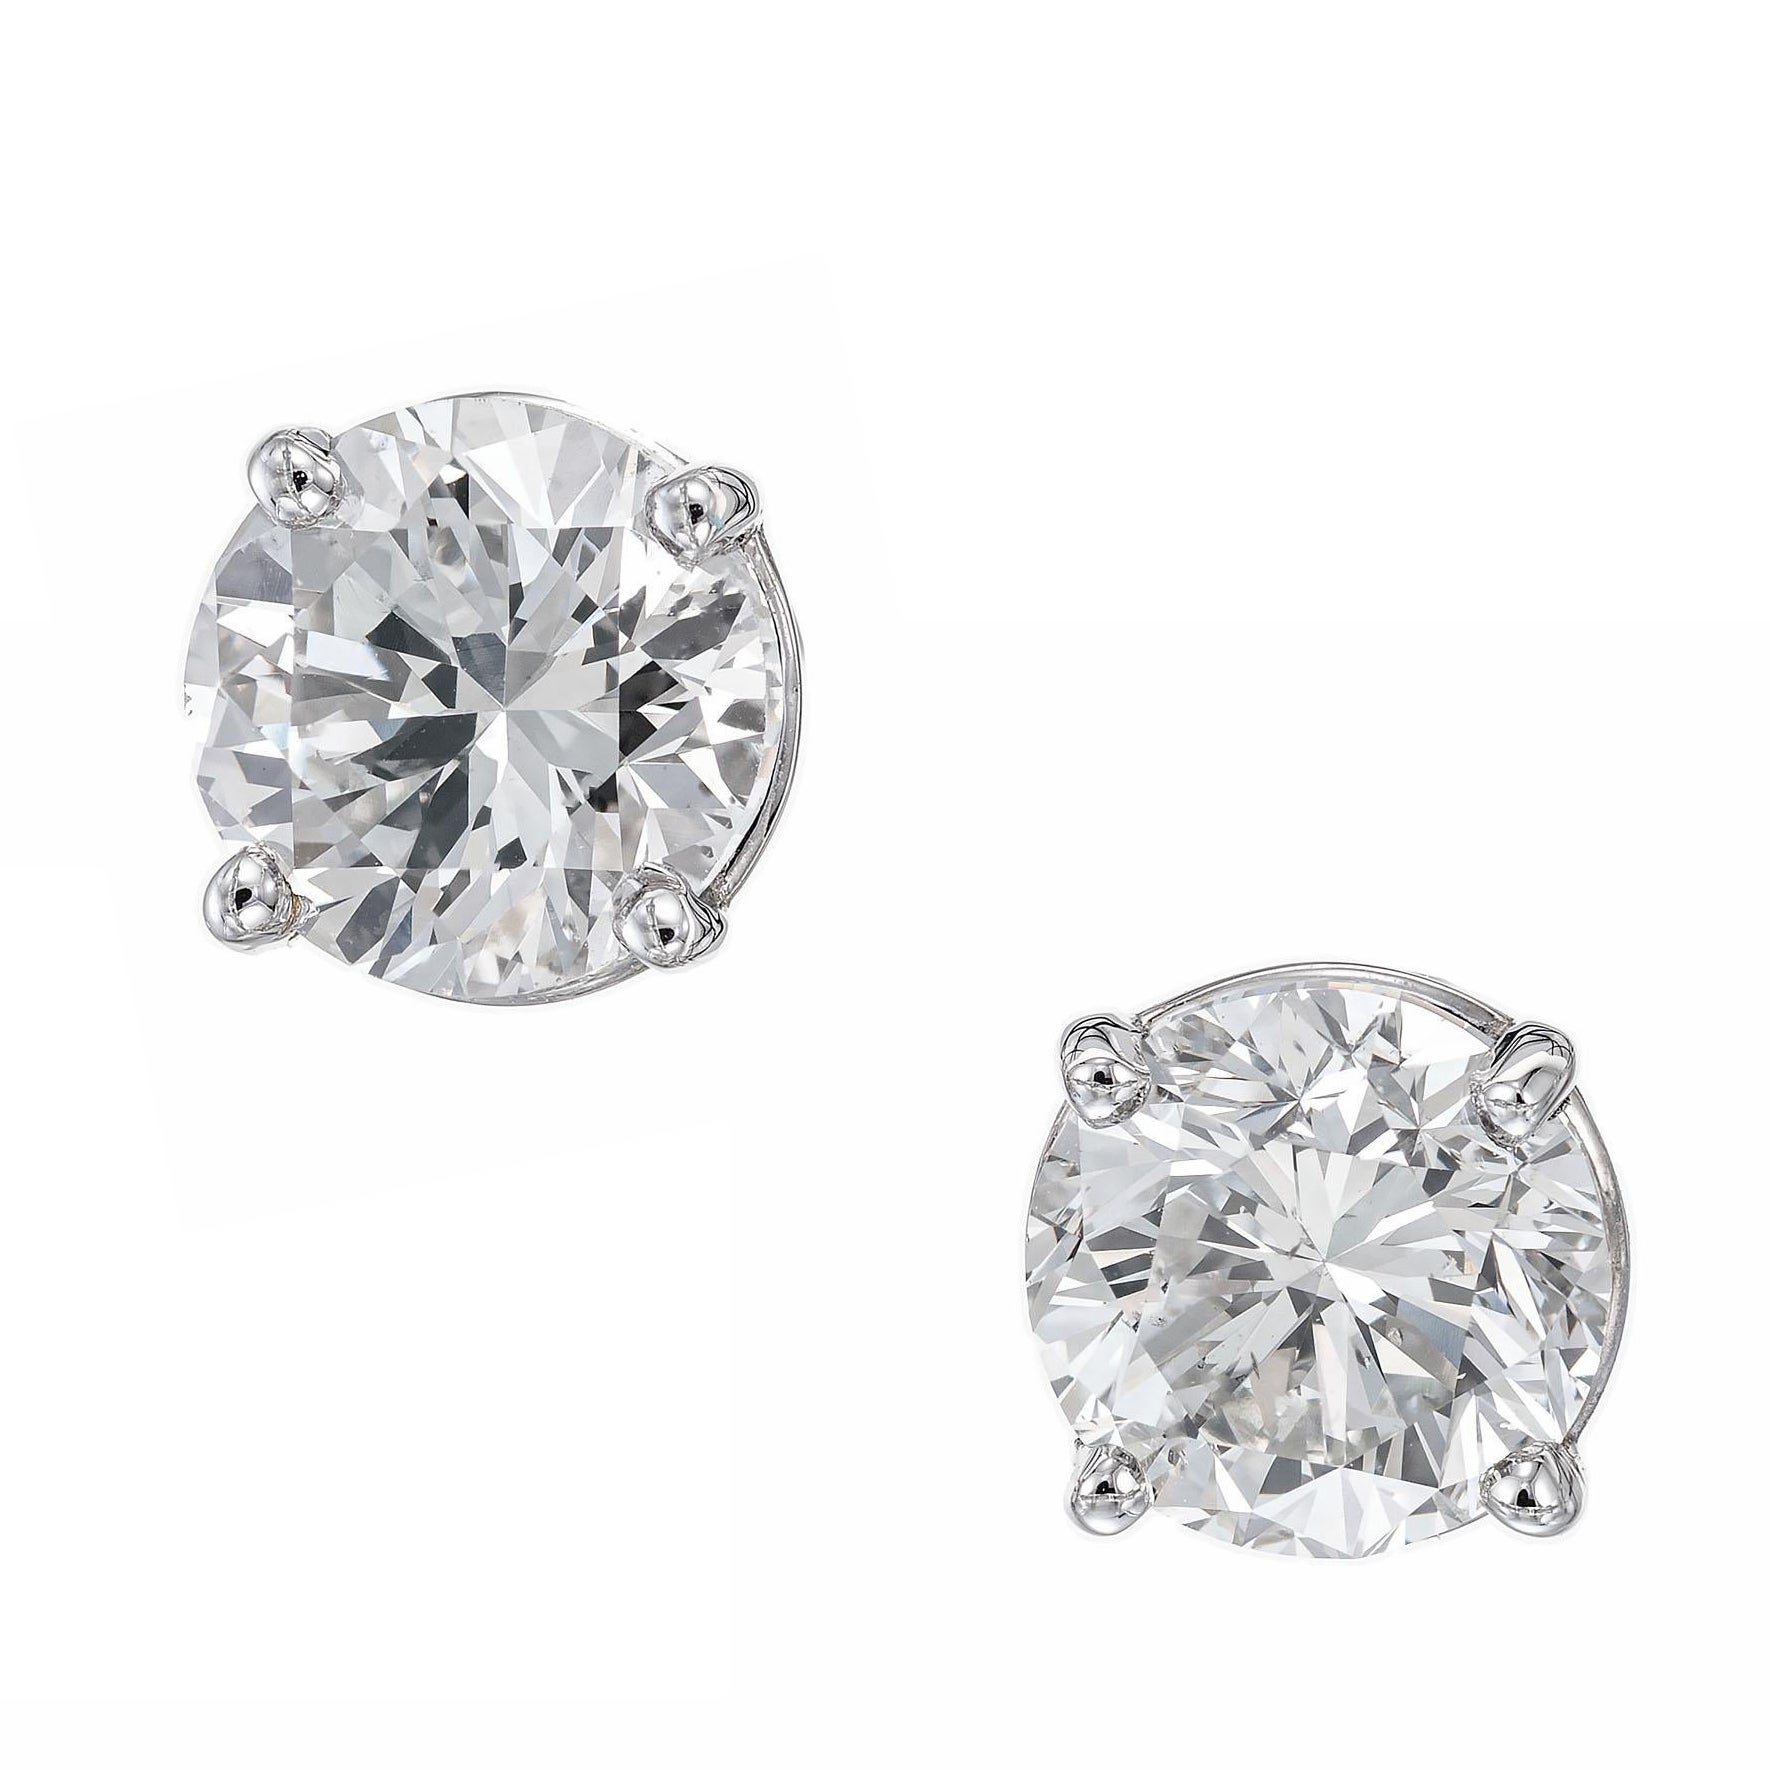 Peter Suchy GIA Certified 2.01 Carat Diamond Platinum Stud Earrings